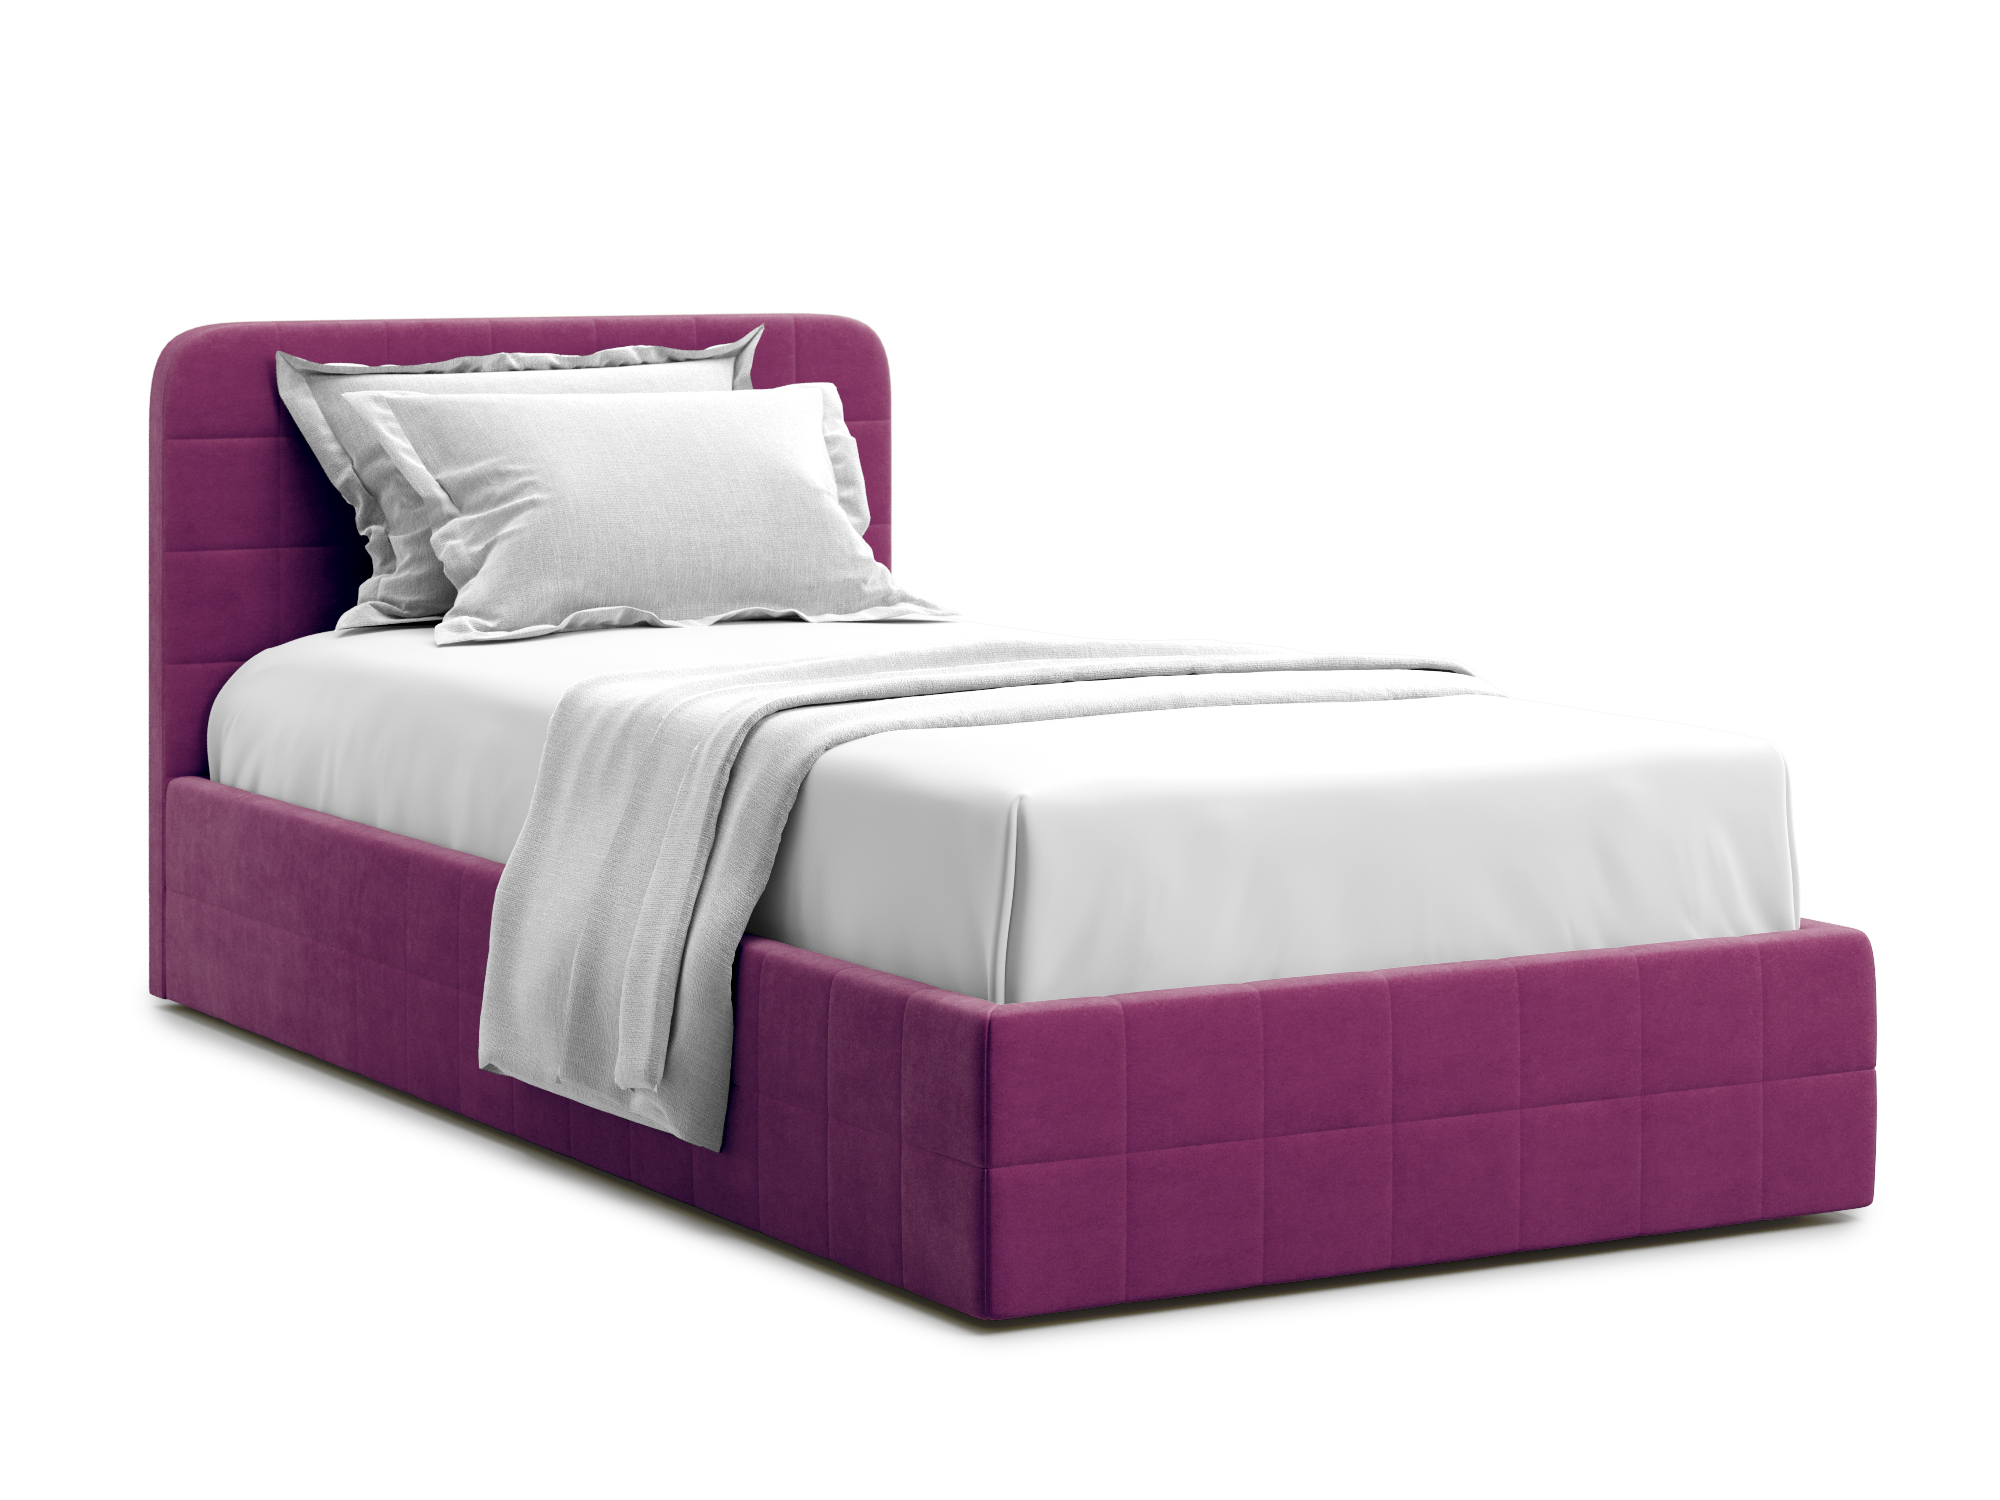 Кровать Adda 90 Velutto 15 Фиолетовый, Массив, ДСП кровать adda 120 velutto 32 серый массив дсп